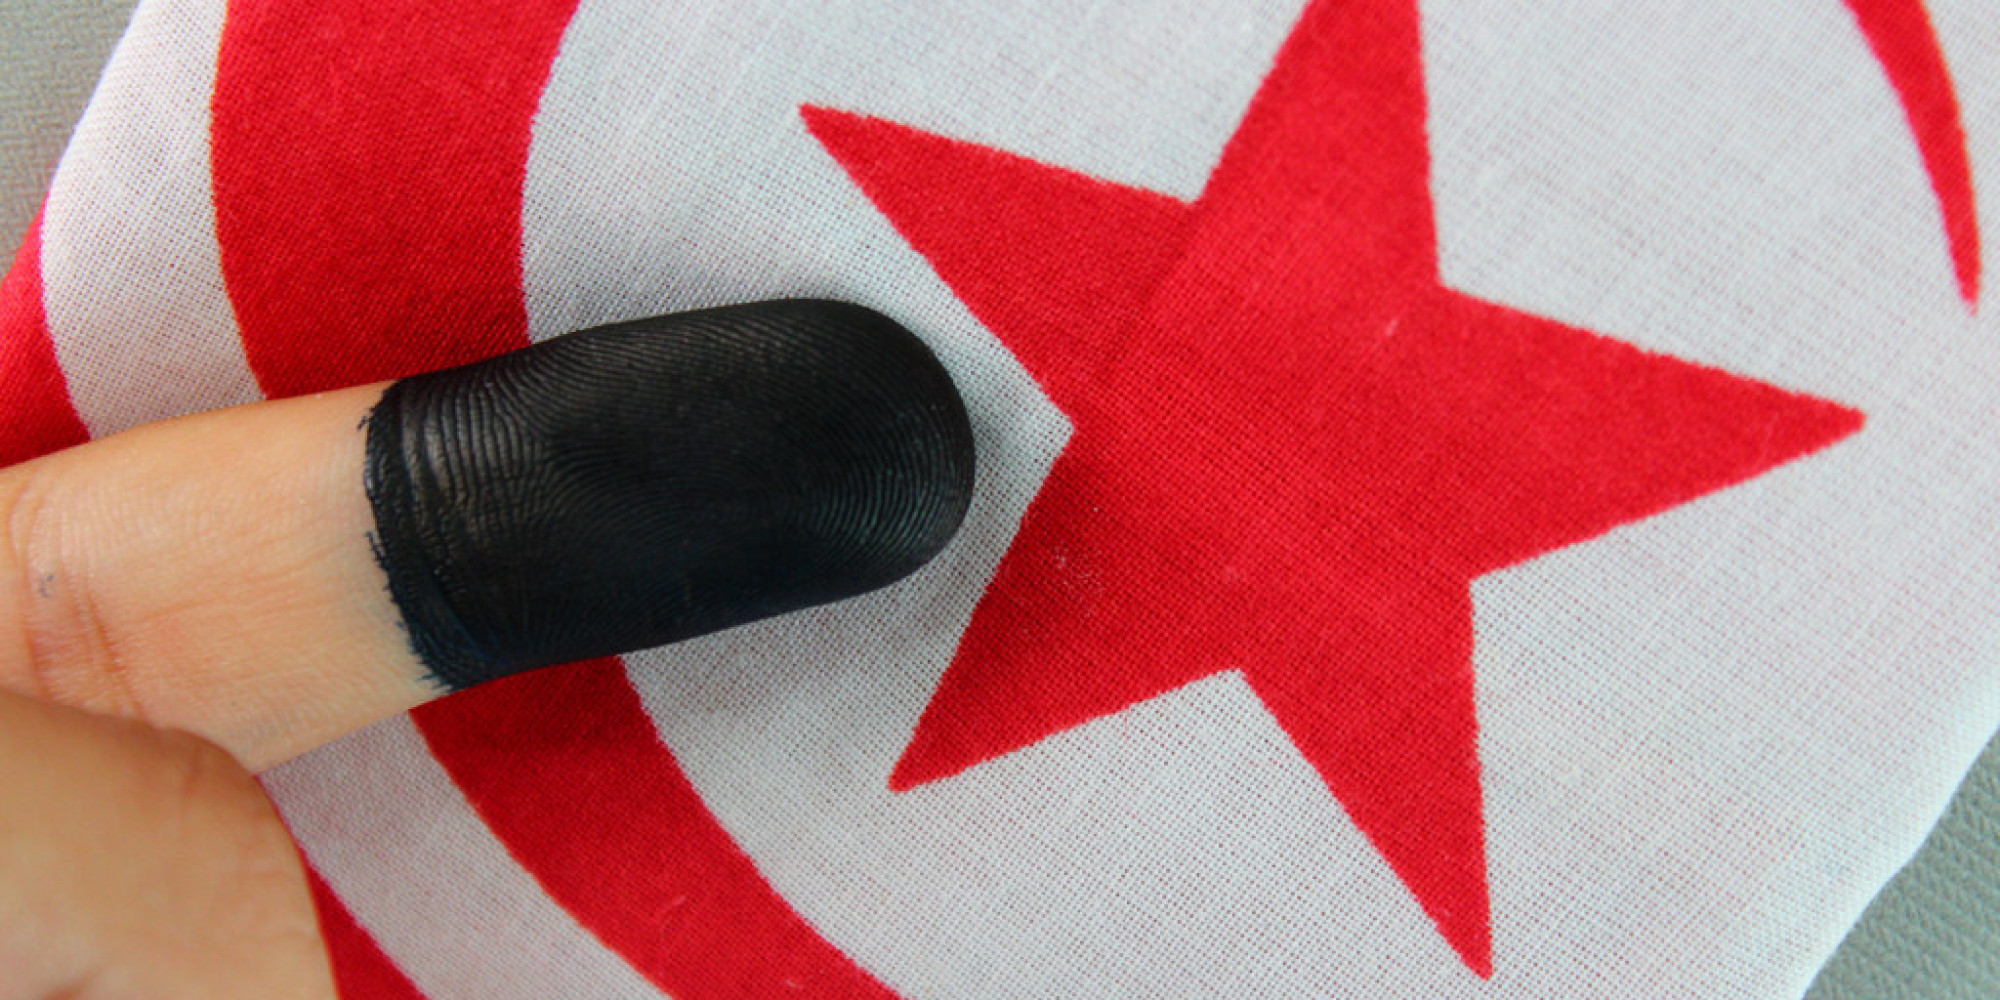 comment s'inscrire election tunisie